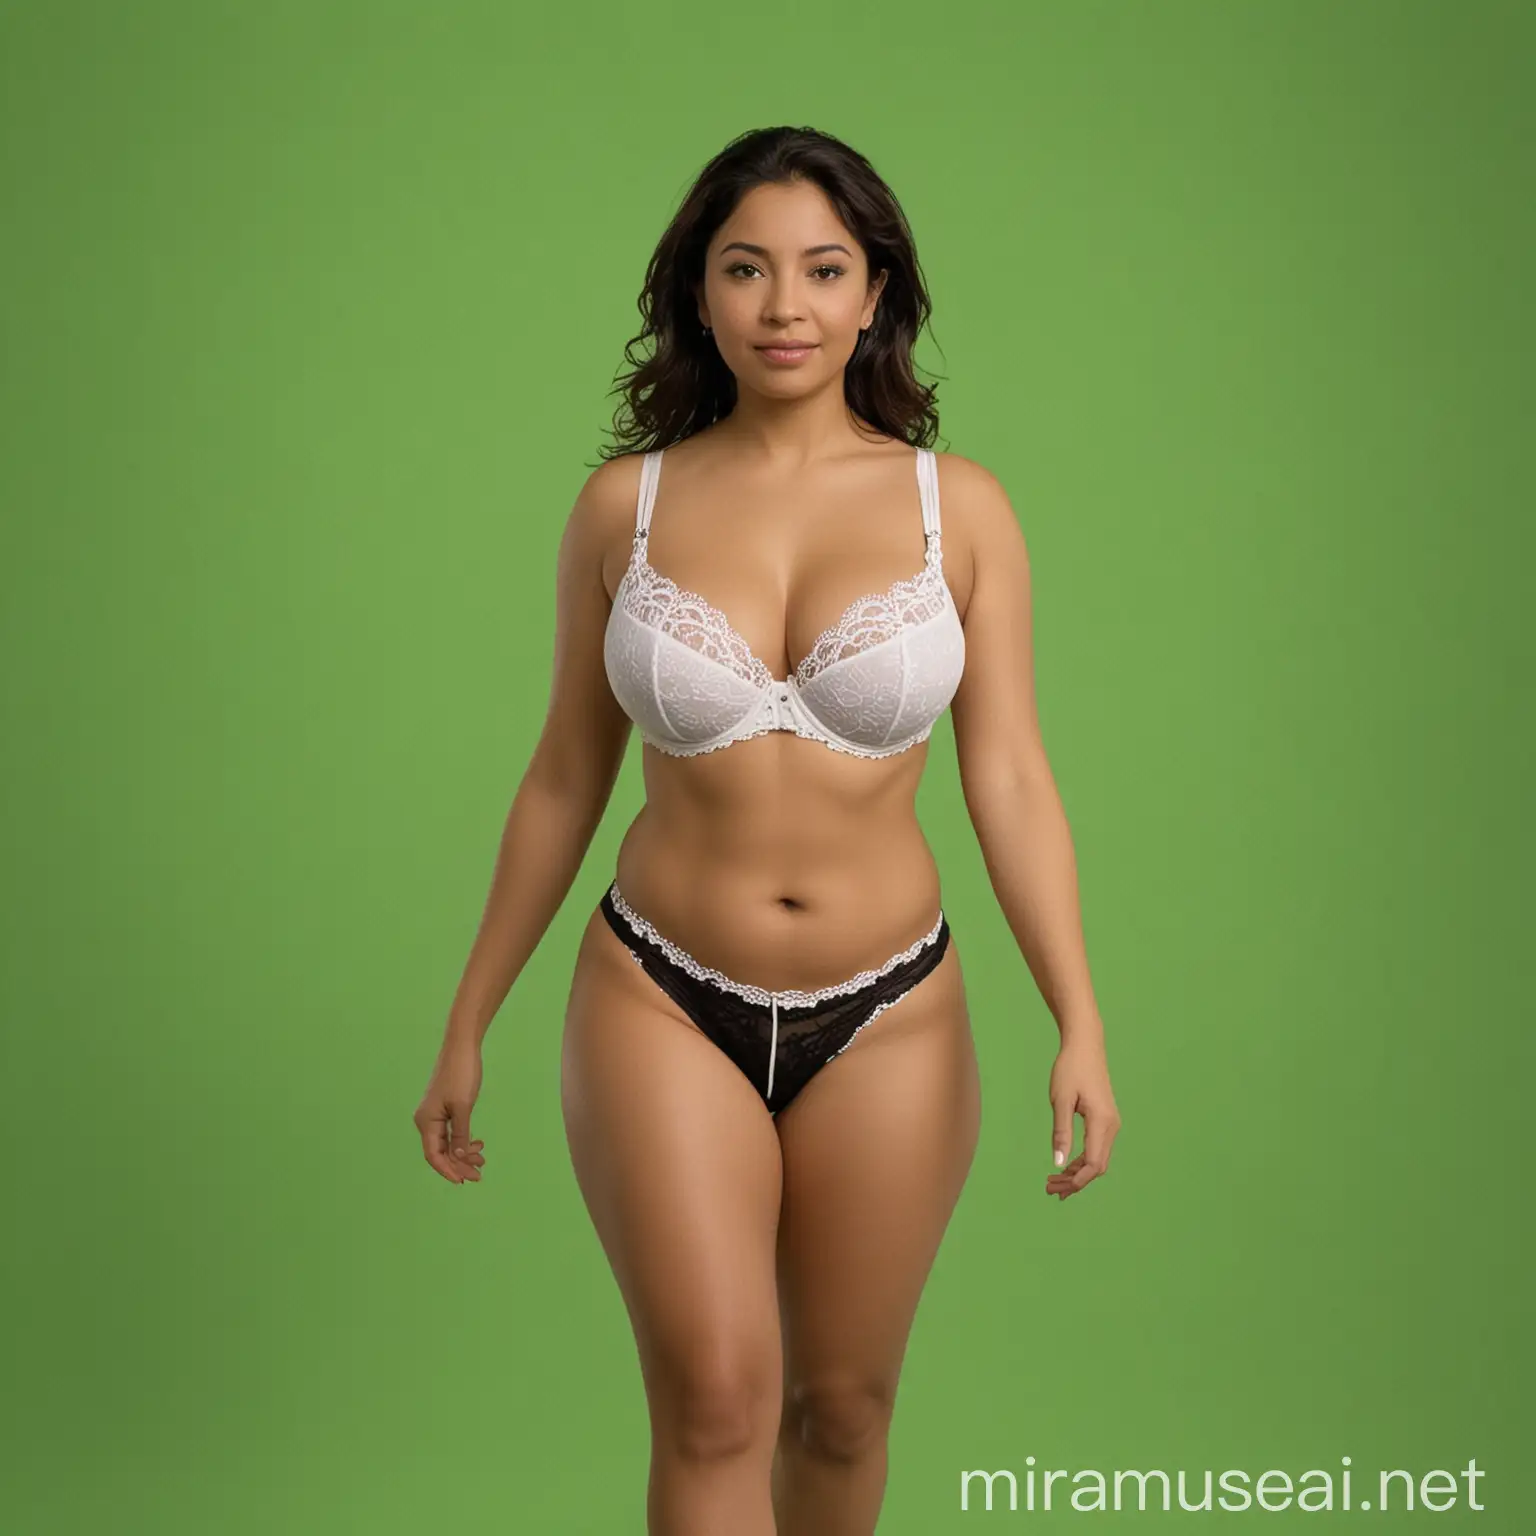 a latino woman in a bra walking directly to camera on greenscreen